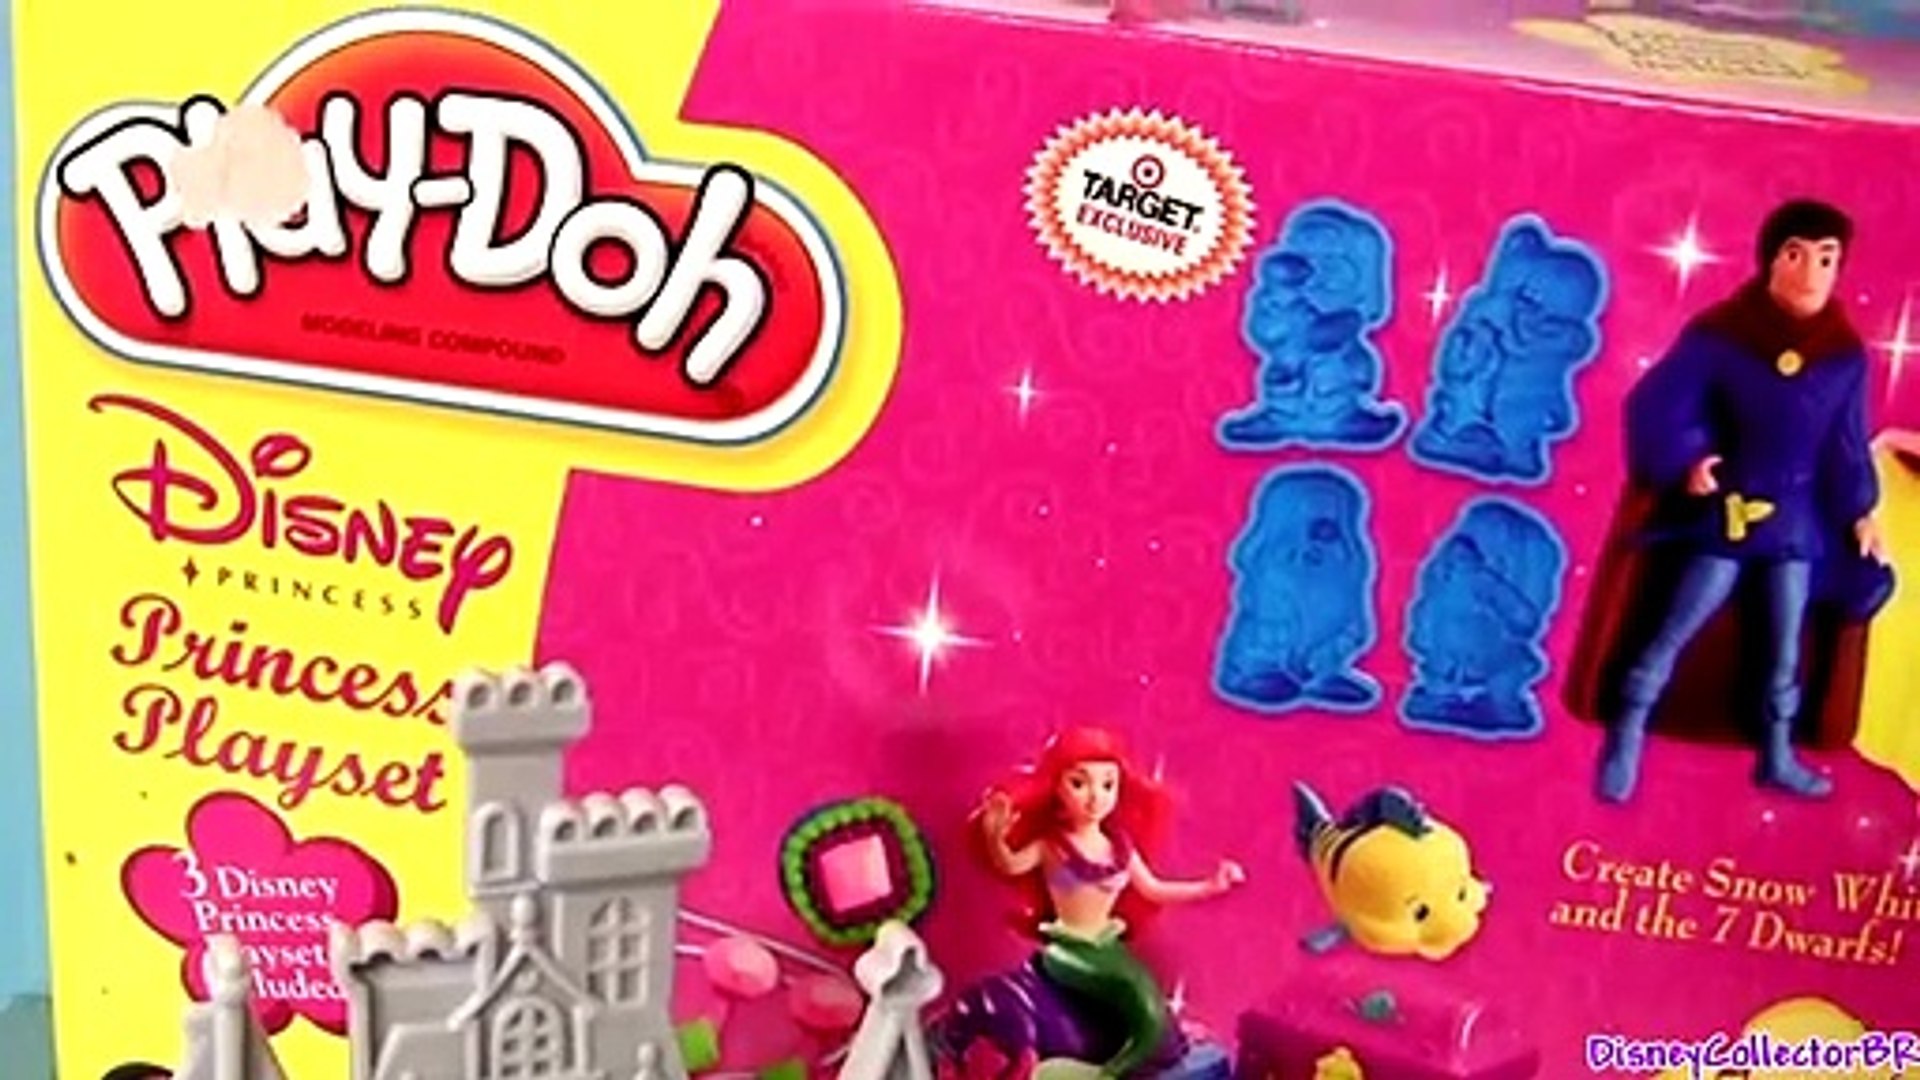 Play-Doh Disney Princess la Bella e Bestia Be Our Ospite Locanda Banquet Set 